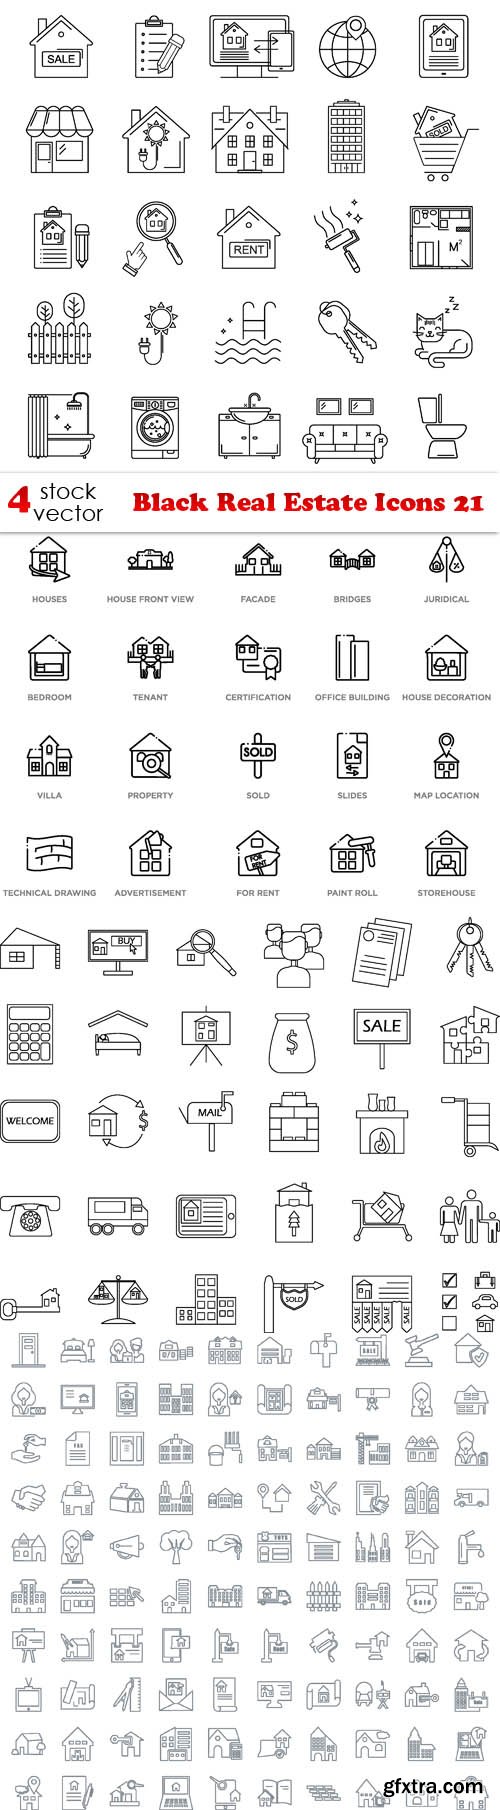 Vectors - Black Real Estate Icons 21